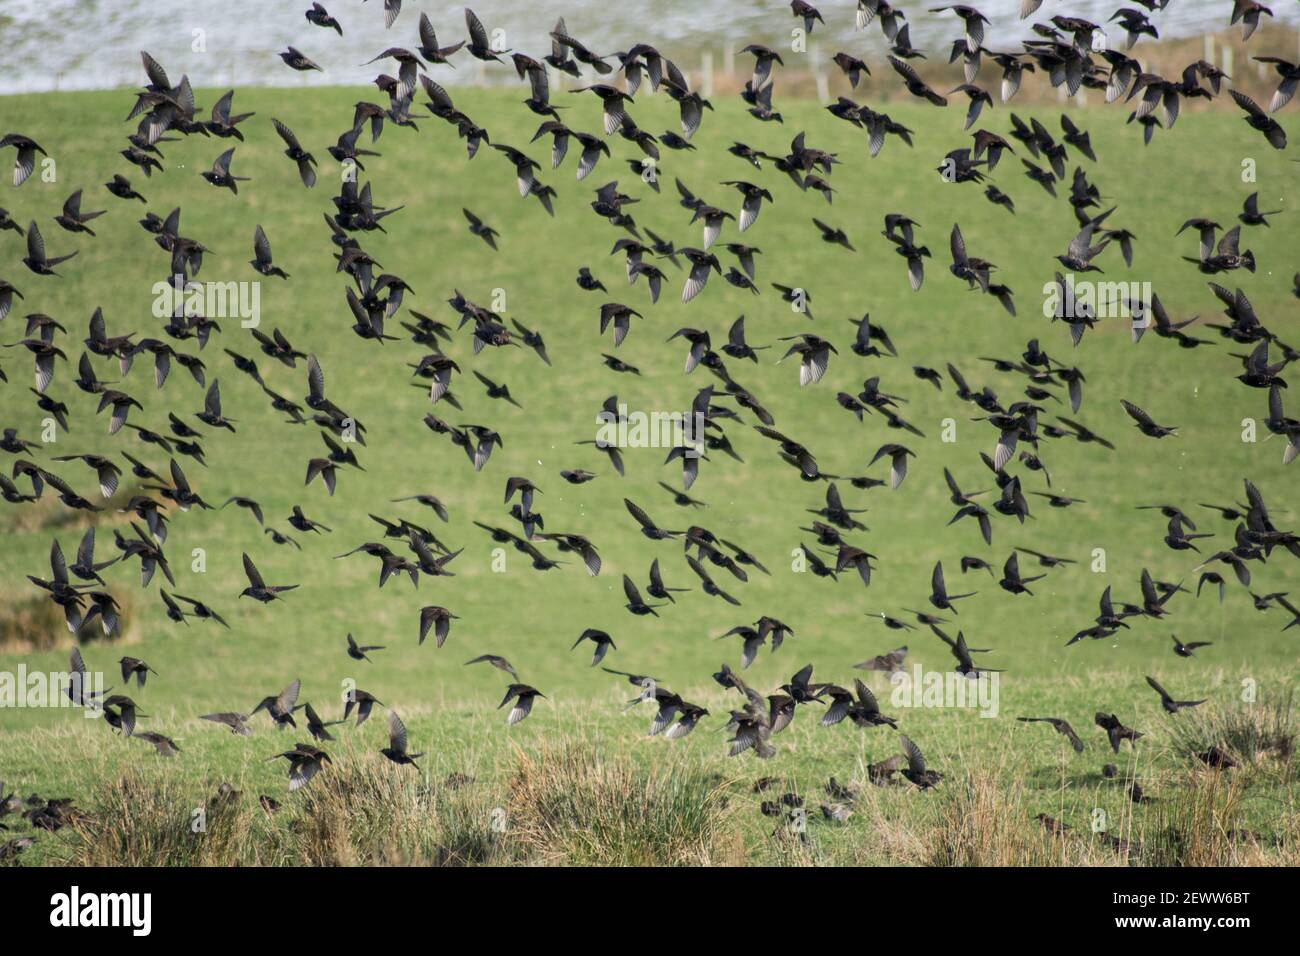 Flock of birds taking off in flight Stock Photo